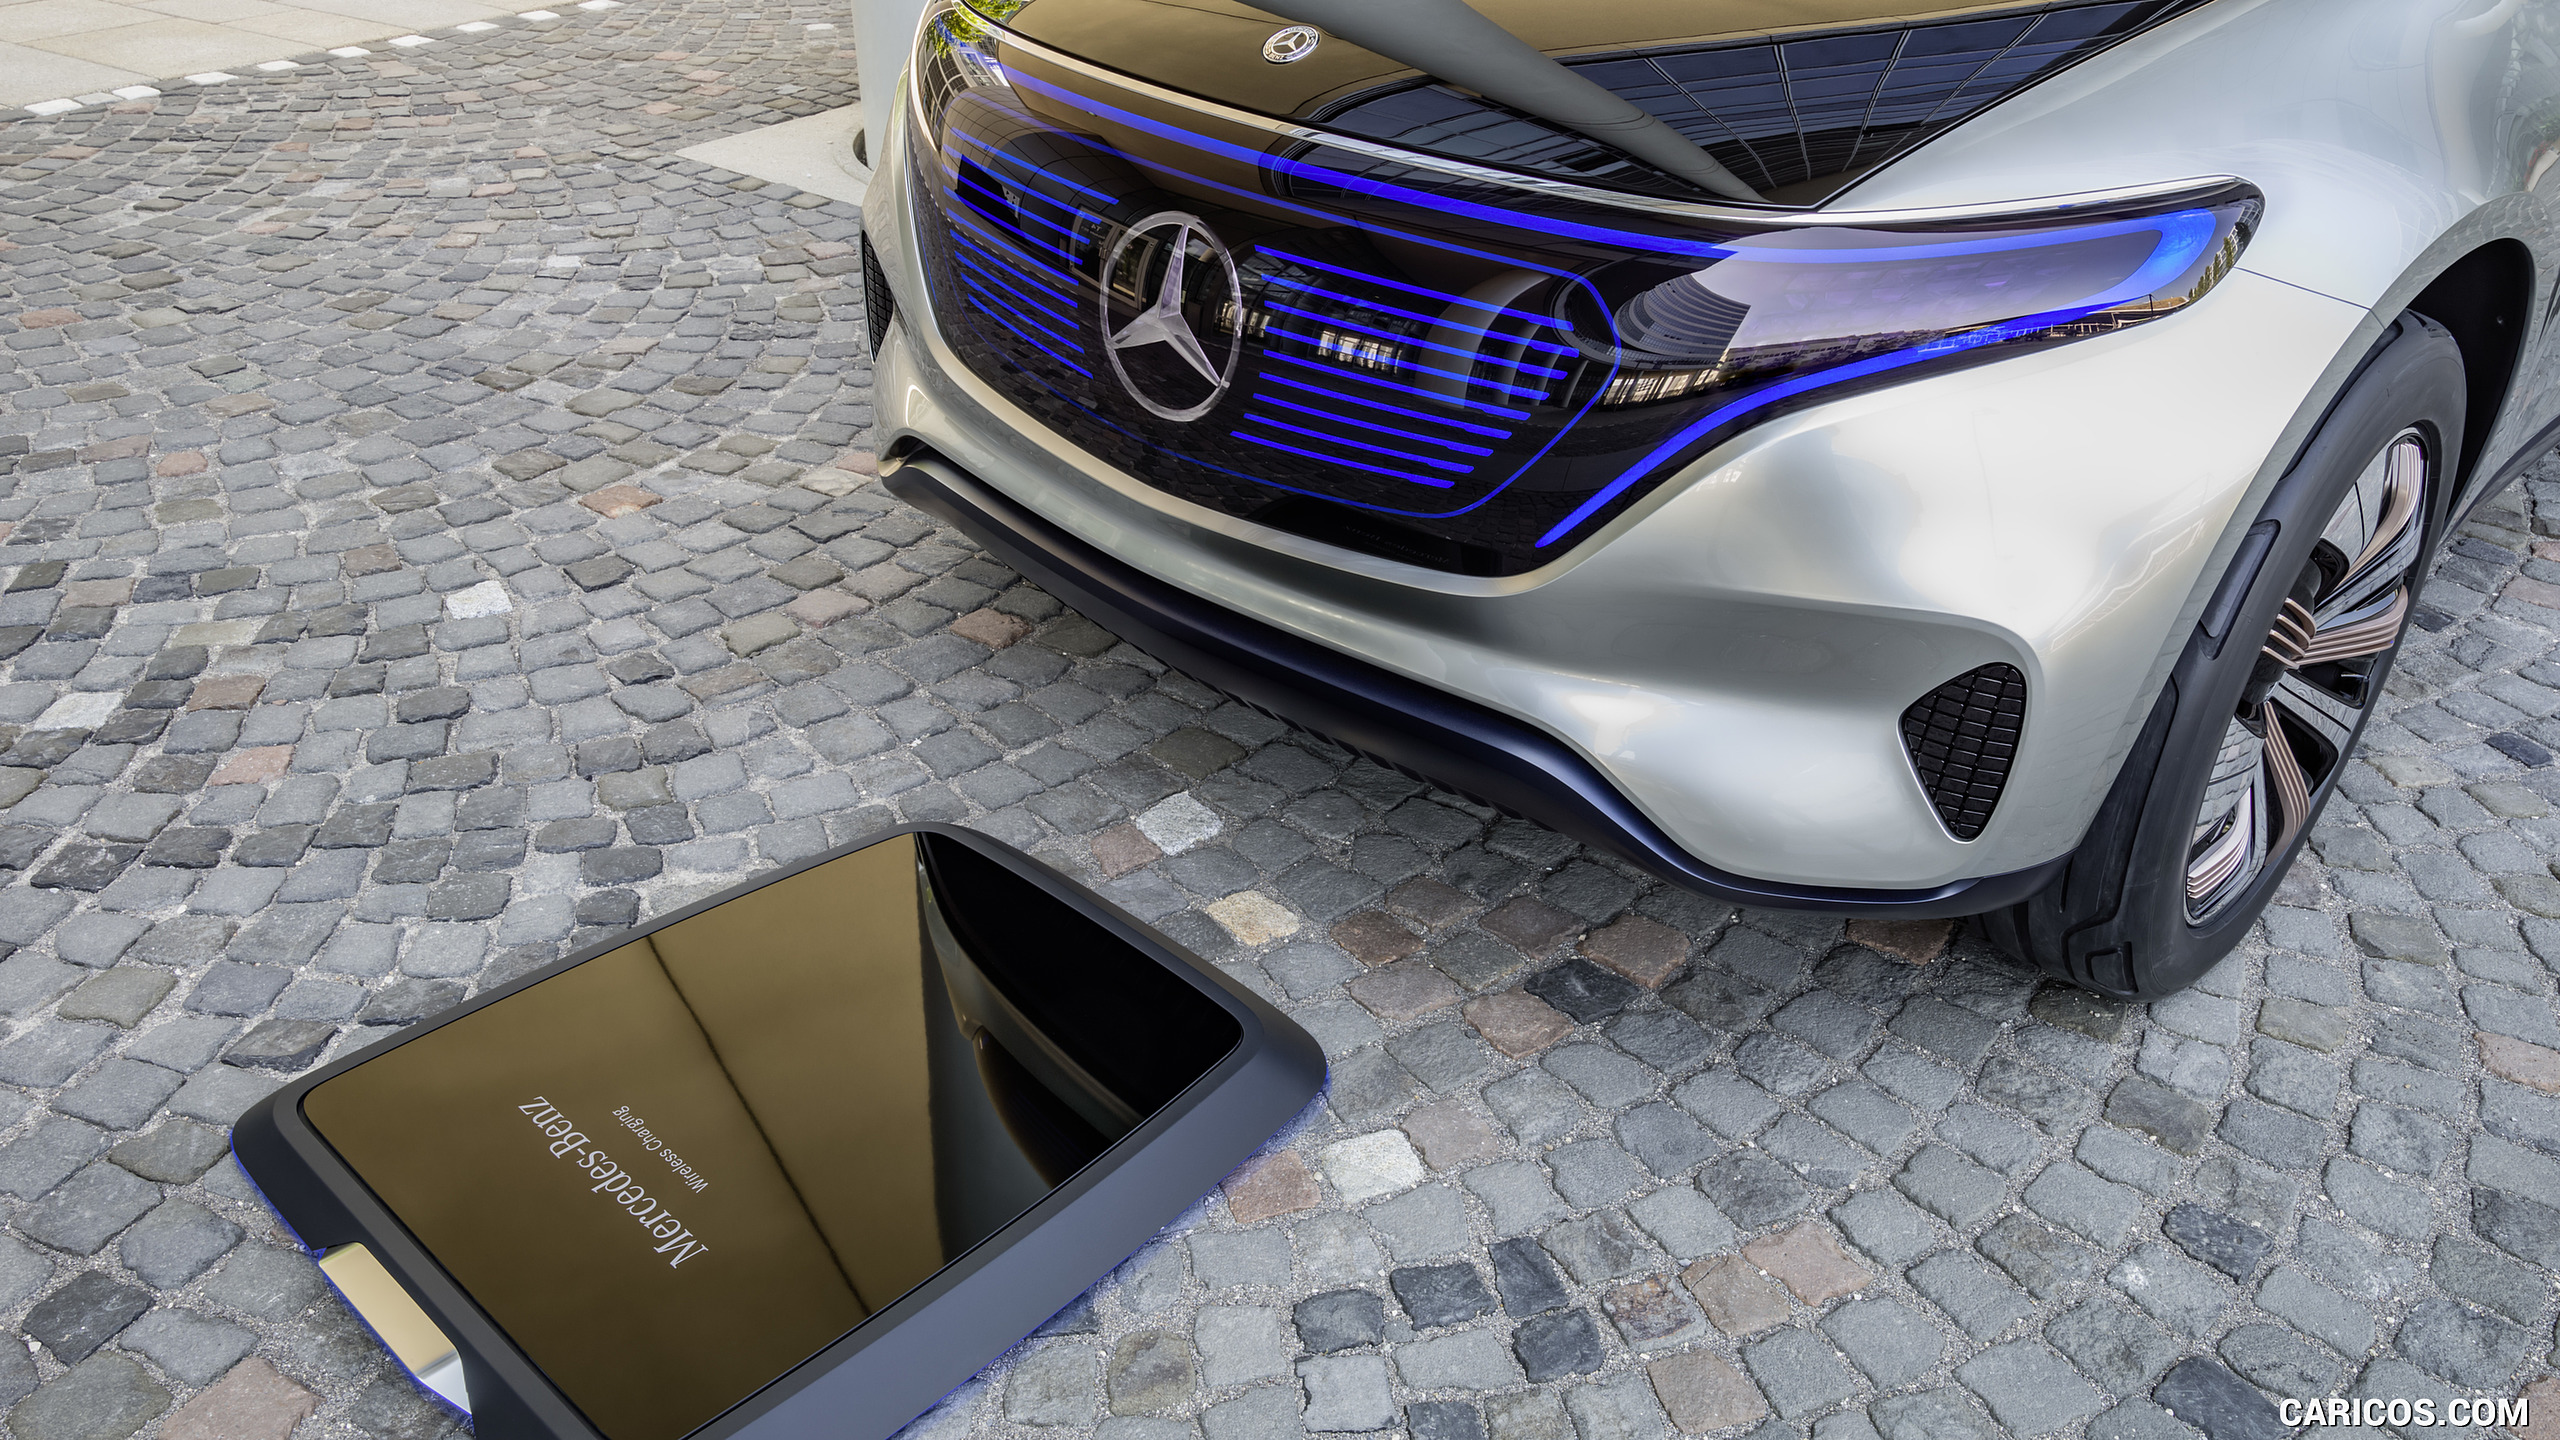 2016 Mercedes-Benz Generation EQ SUV Concept - Inductive Charging Platform, #17 of 50